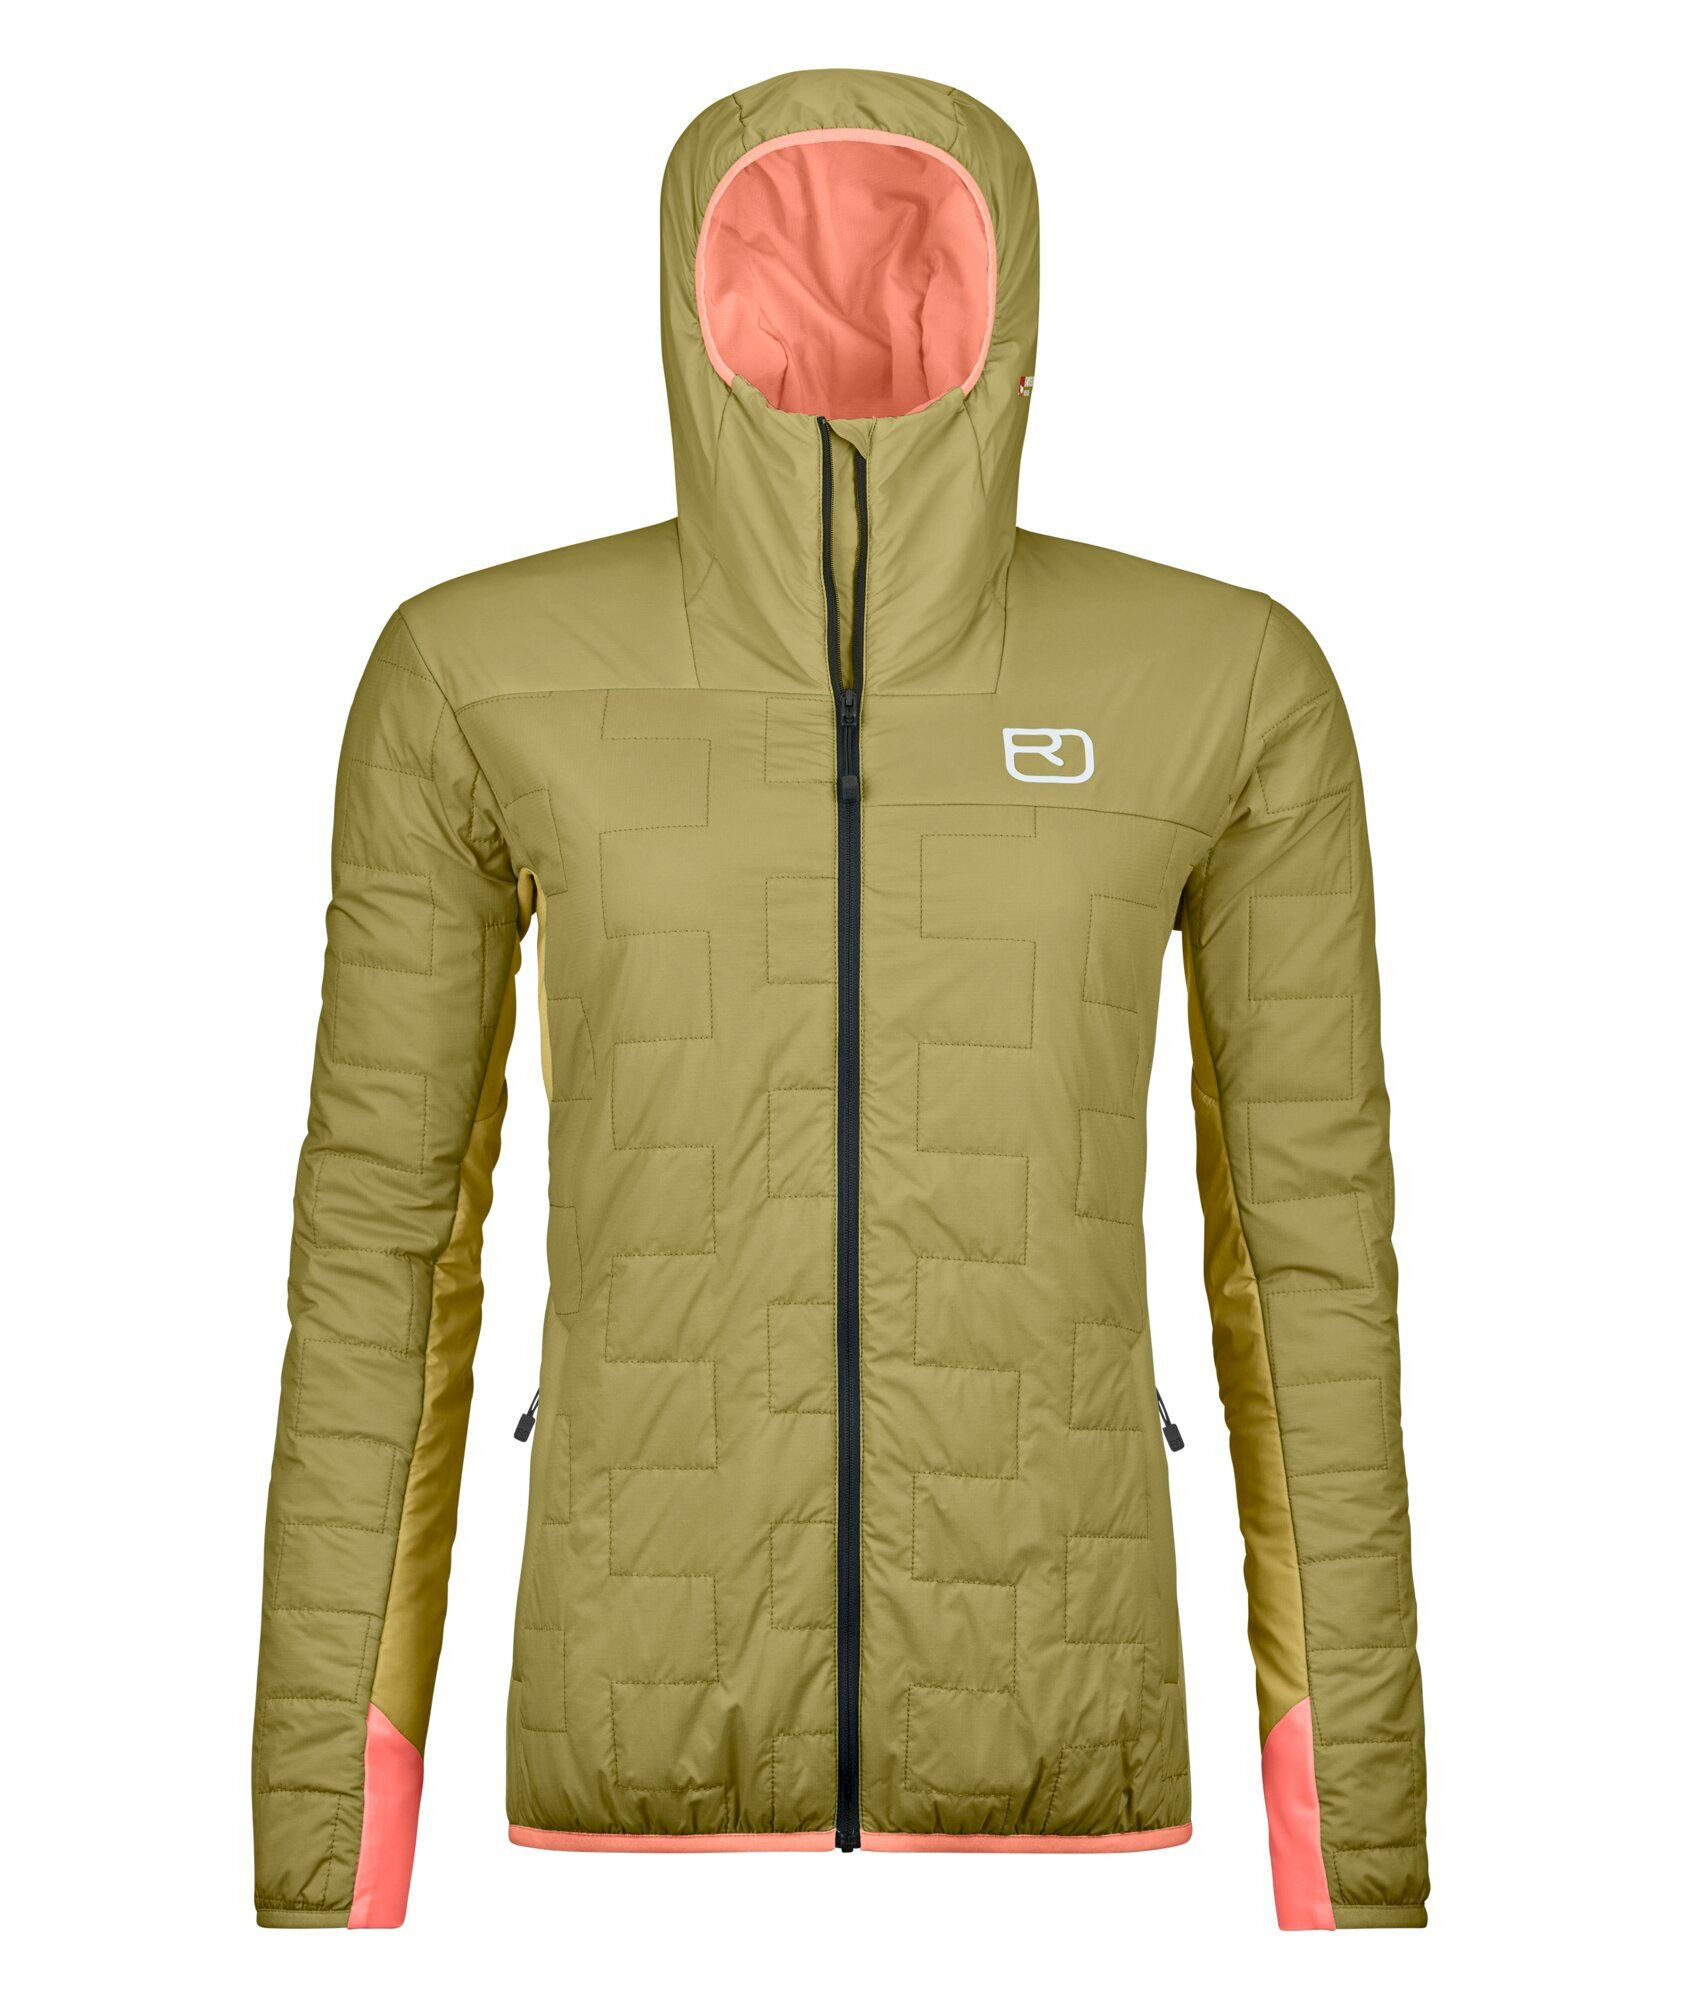 Ortovox Swisswool Piz Badus Jacket - Synthetic jacket - Women's